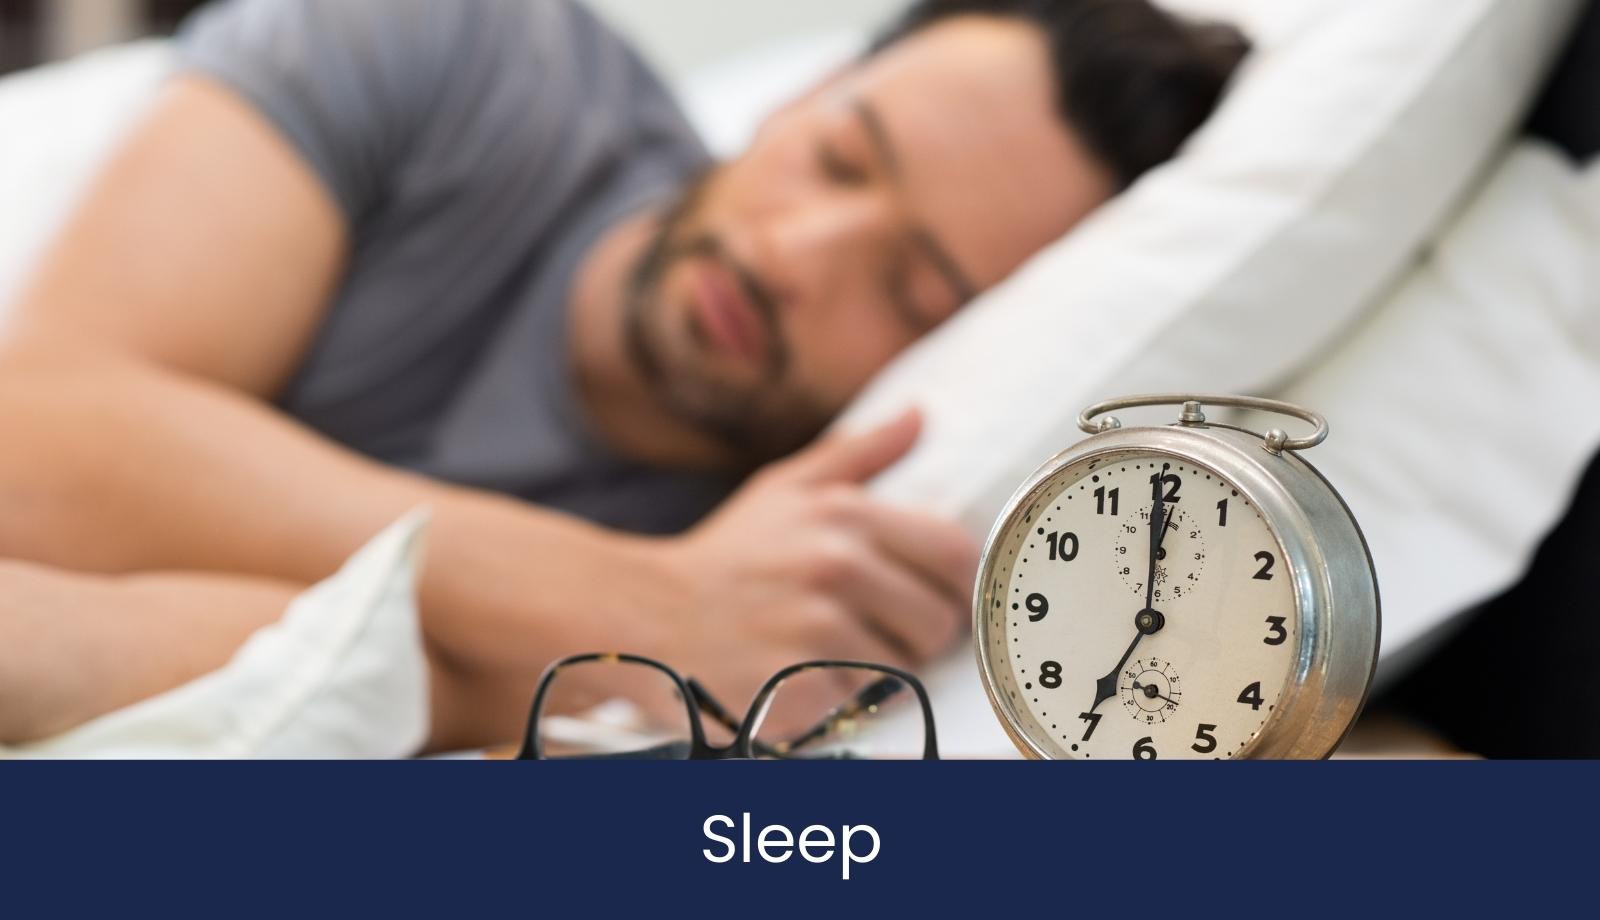 Sleep Health Program